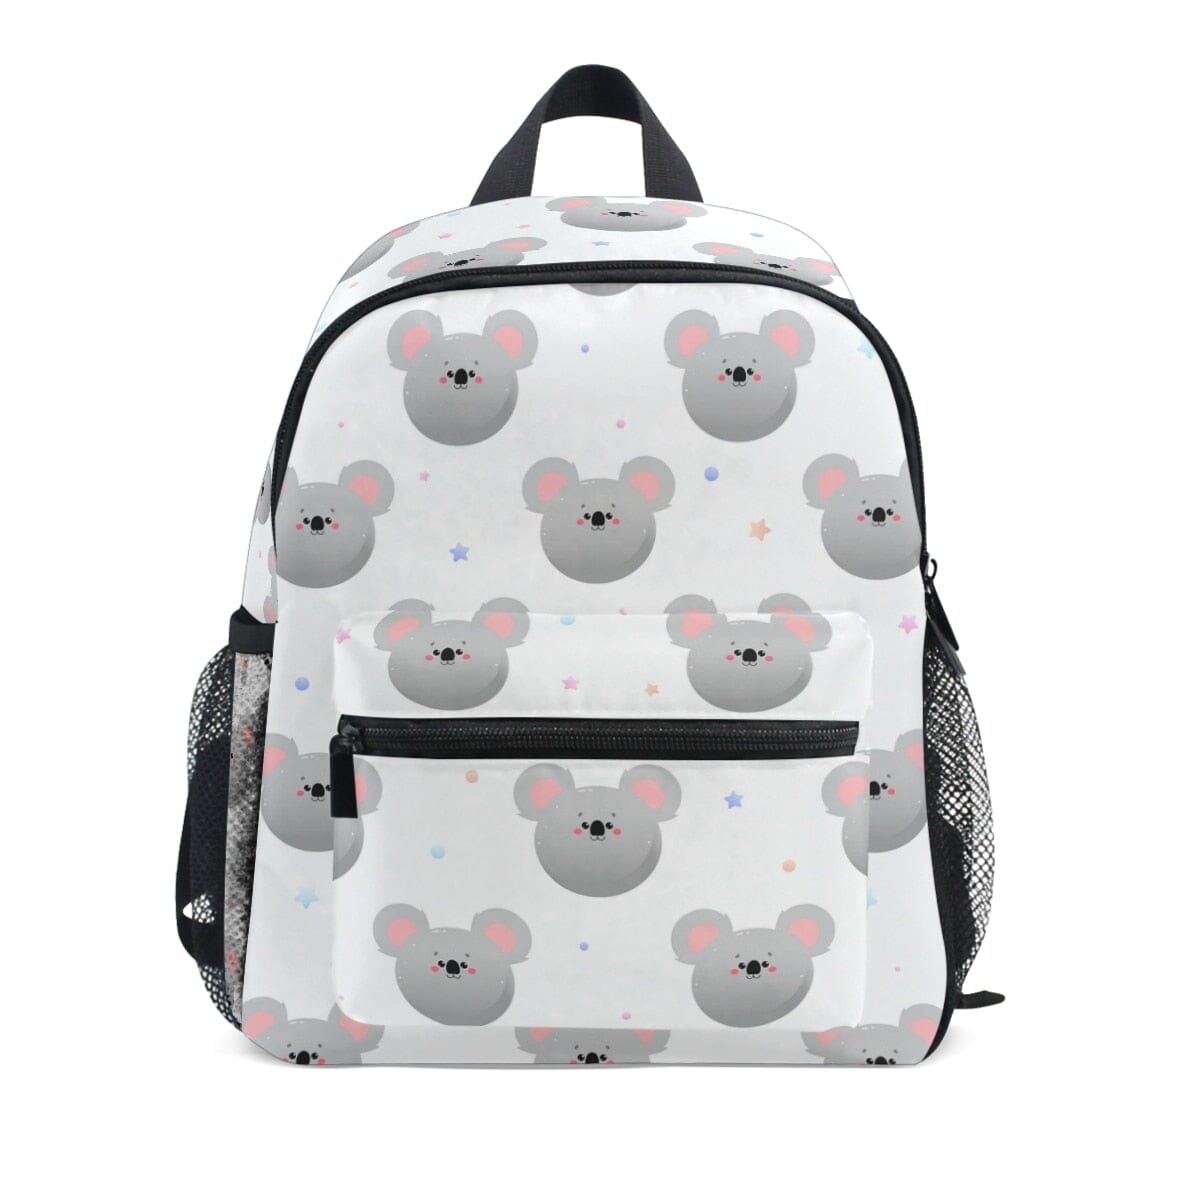 Koala Mini Backpack The Store Bags 05 